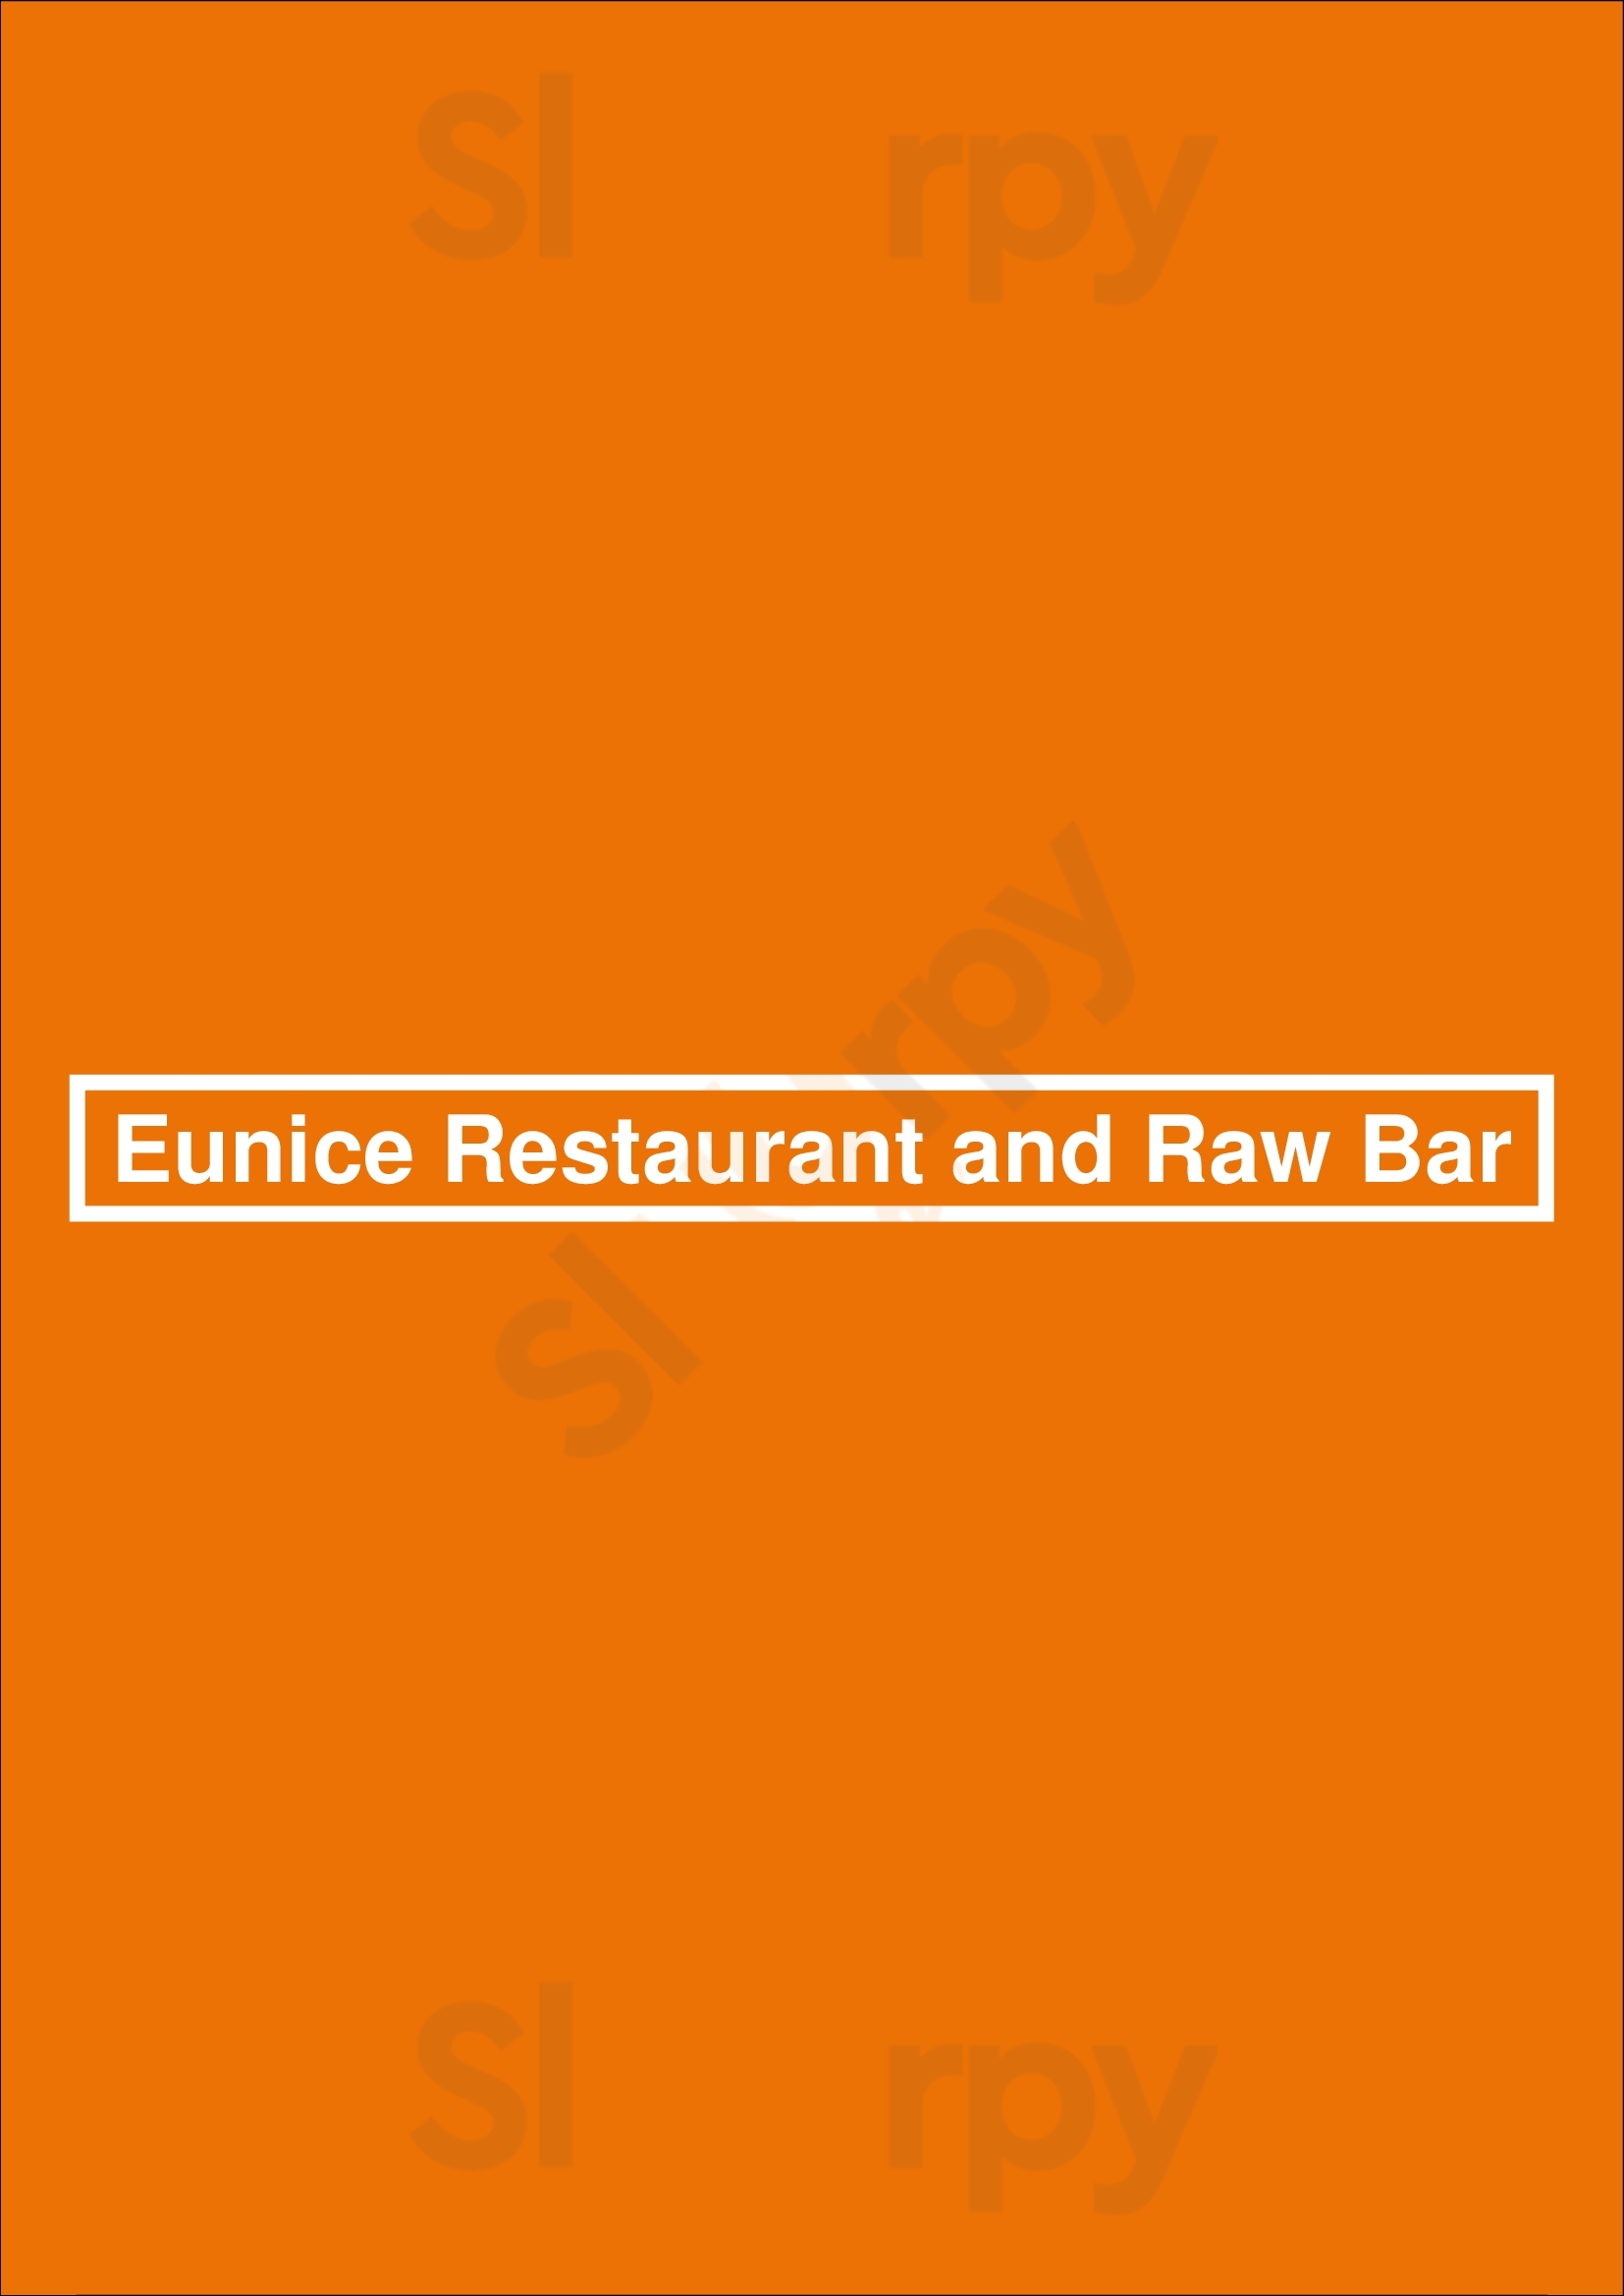 Eunice Restaurant Houston Menu - 1